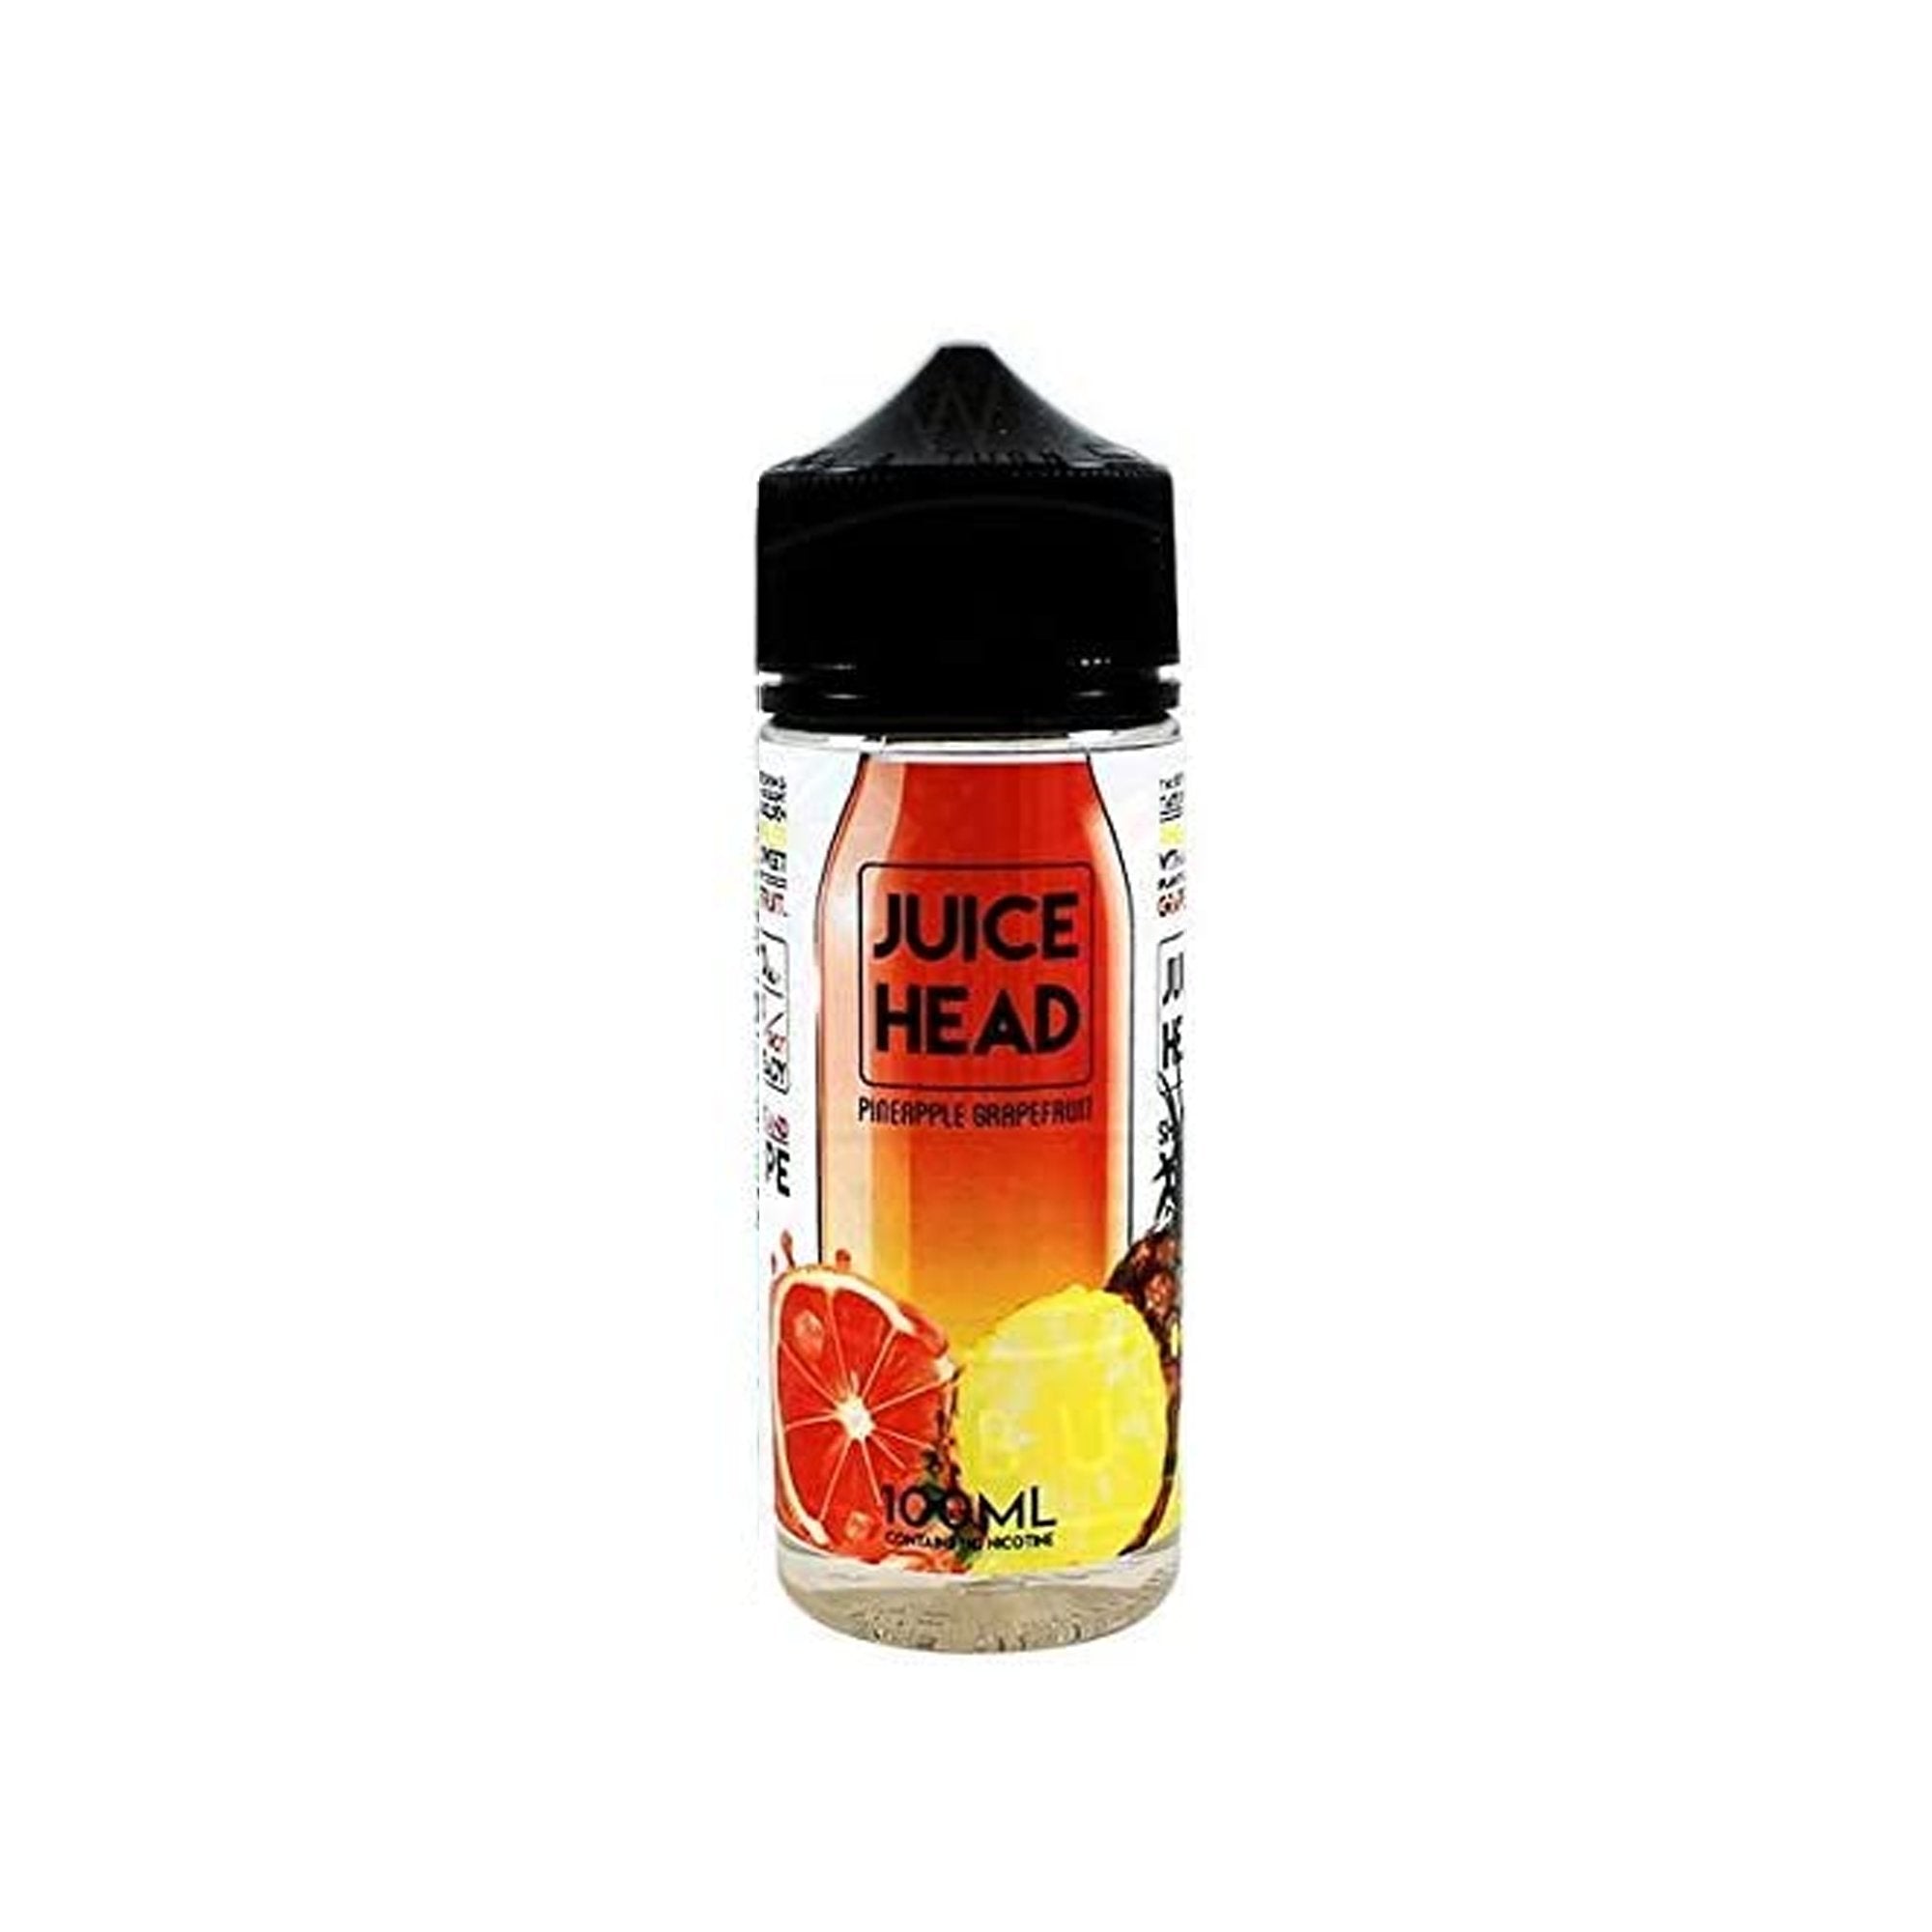 Juice Head Shortfill 120ml E-Liquid - Wolfvapes.co.uk-Pineapple Grapefruit